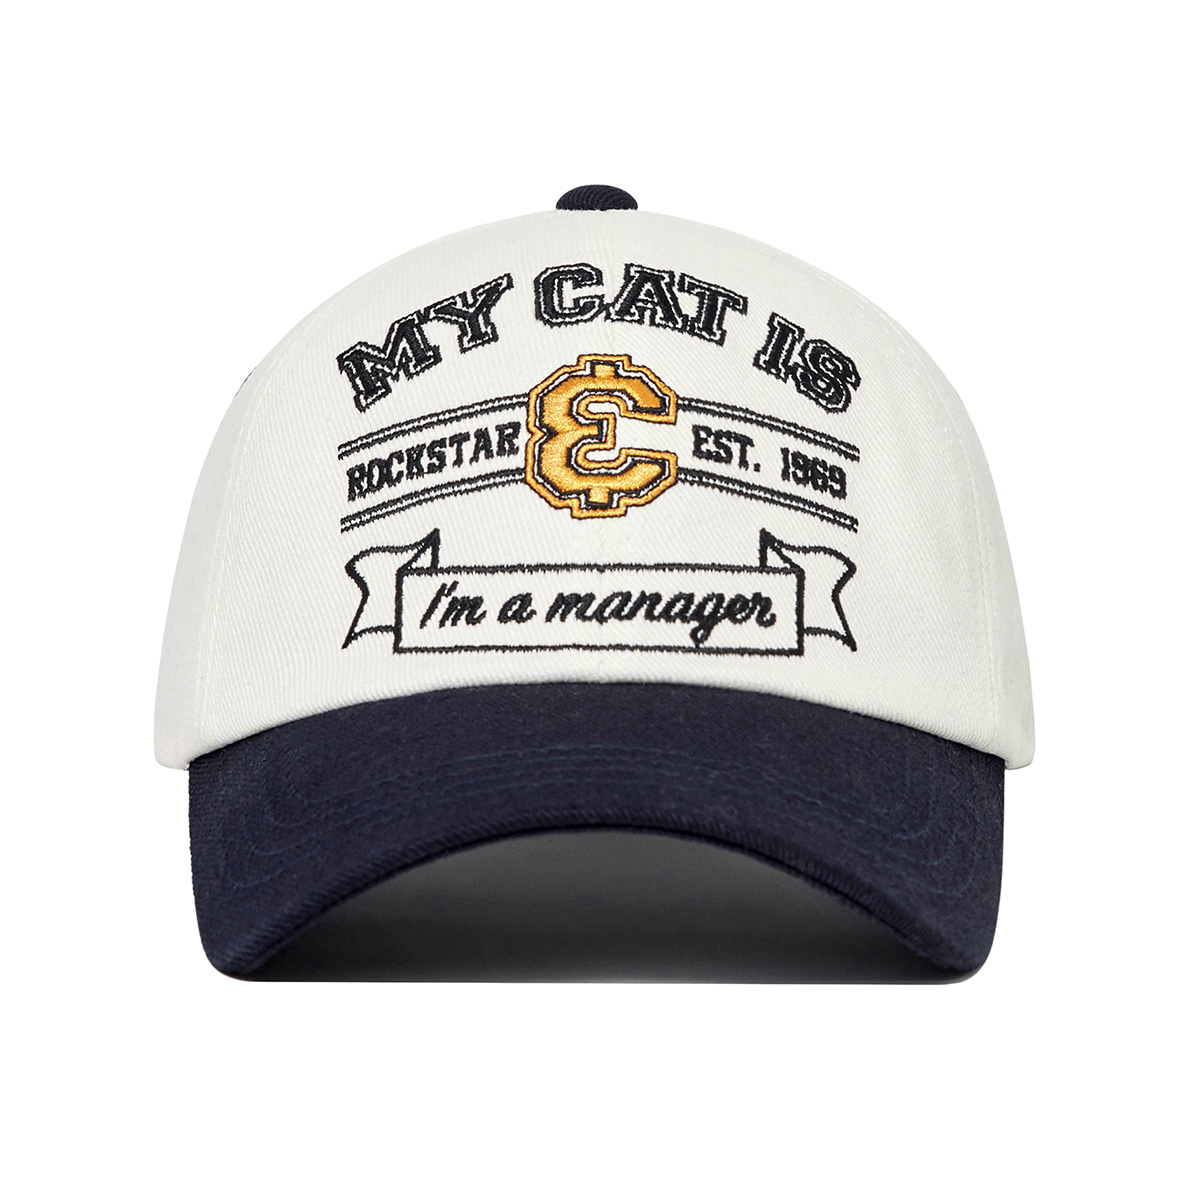 My cat is Rockstar Baseball cap (Heritage ver.) (Ivory/Navy)